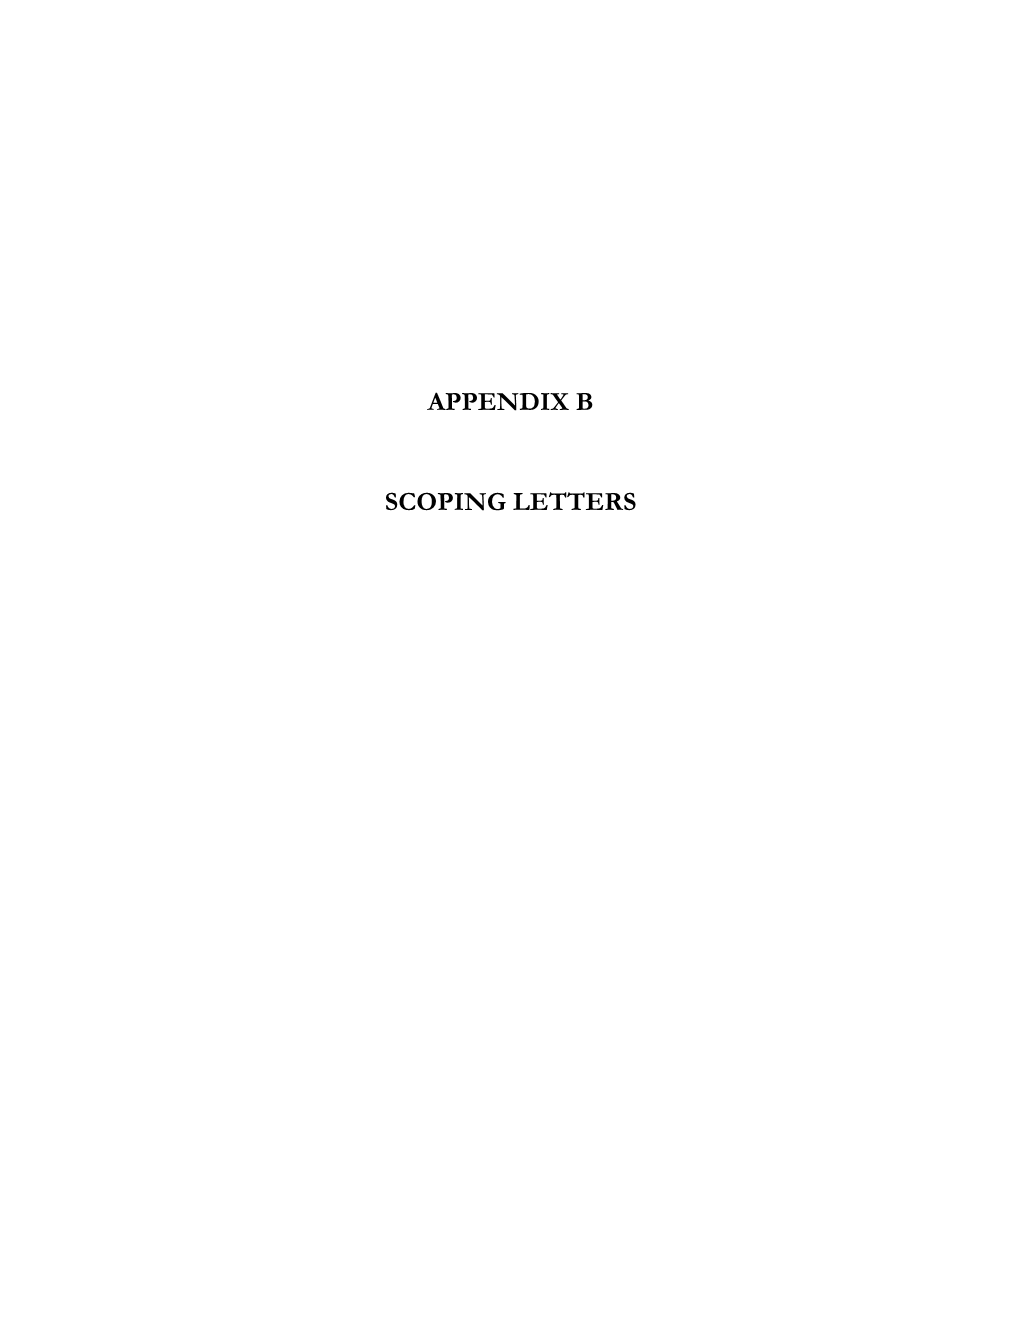 Appendix B Scoping Letters